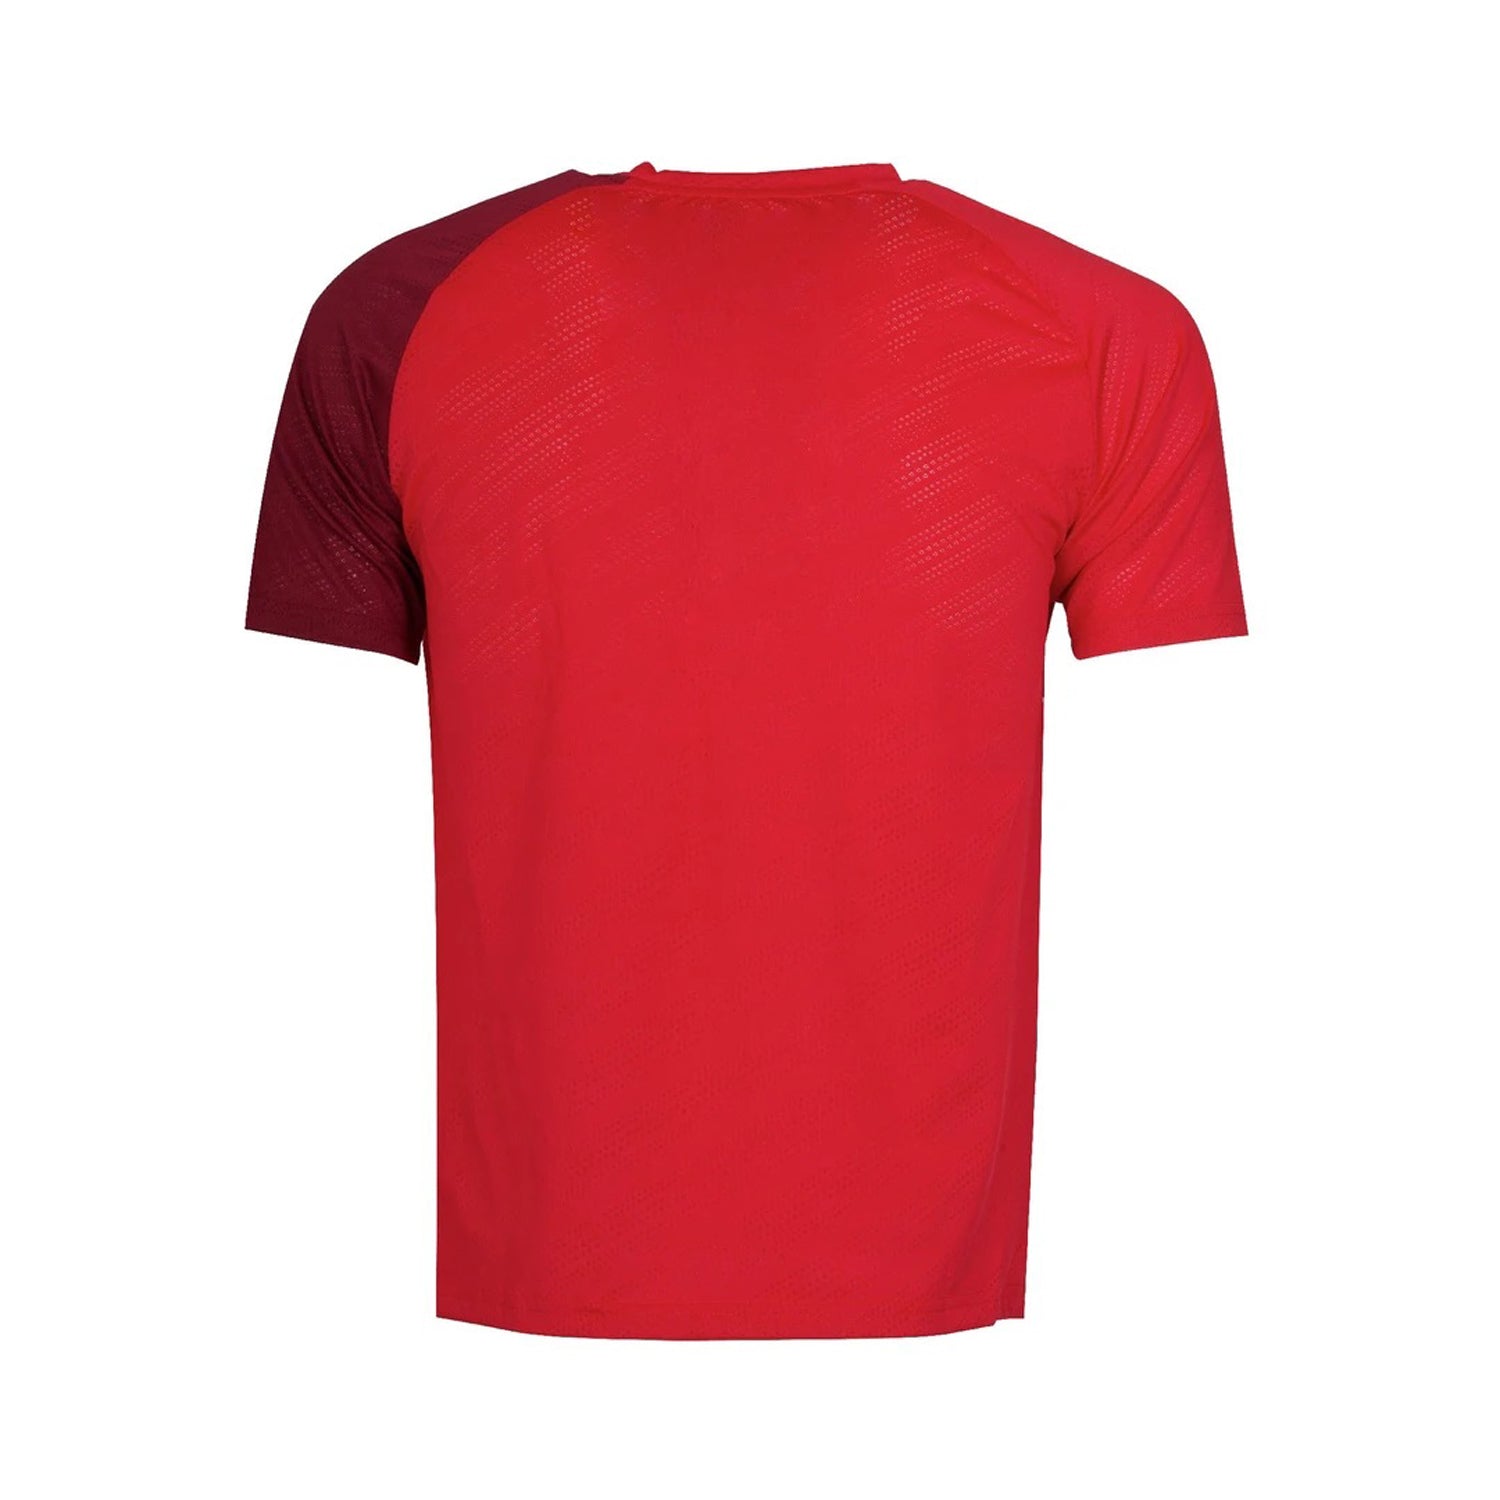 Li-Ning ATSS993 Round Neck Badminton T-Shirt, Red - Best Price online Prokicksports.com